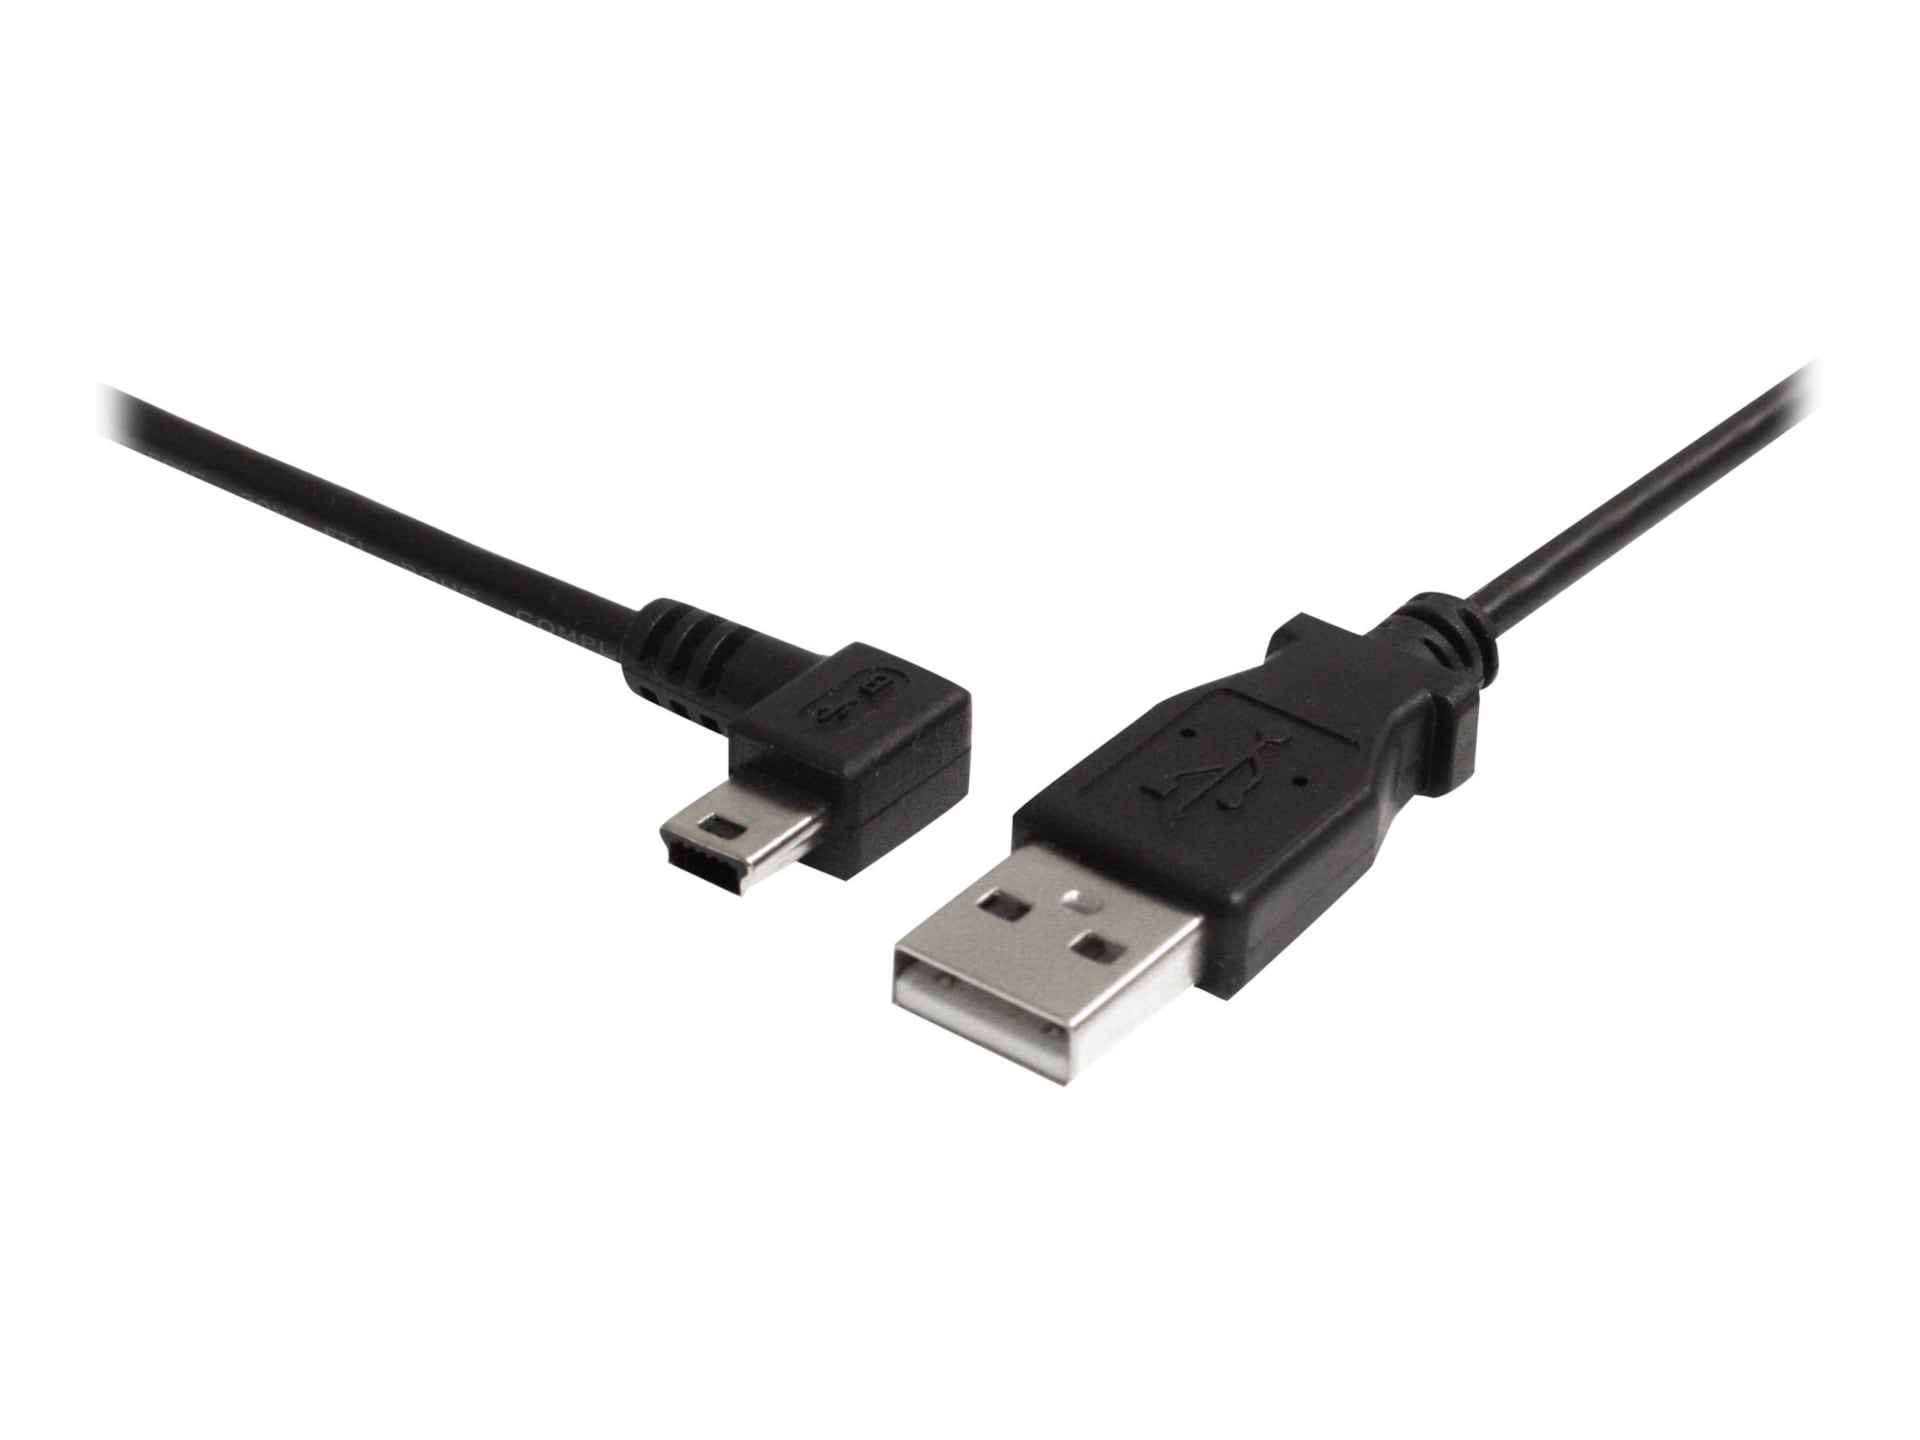 StarTech.com 6 ft Mini USB Cable - A to Left Angle Mini B